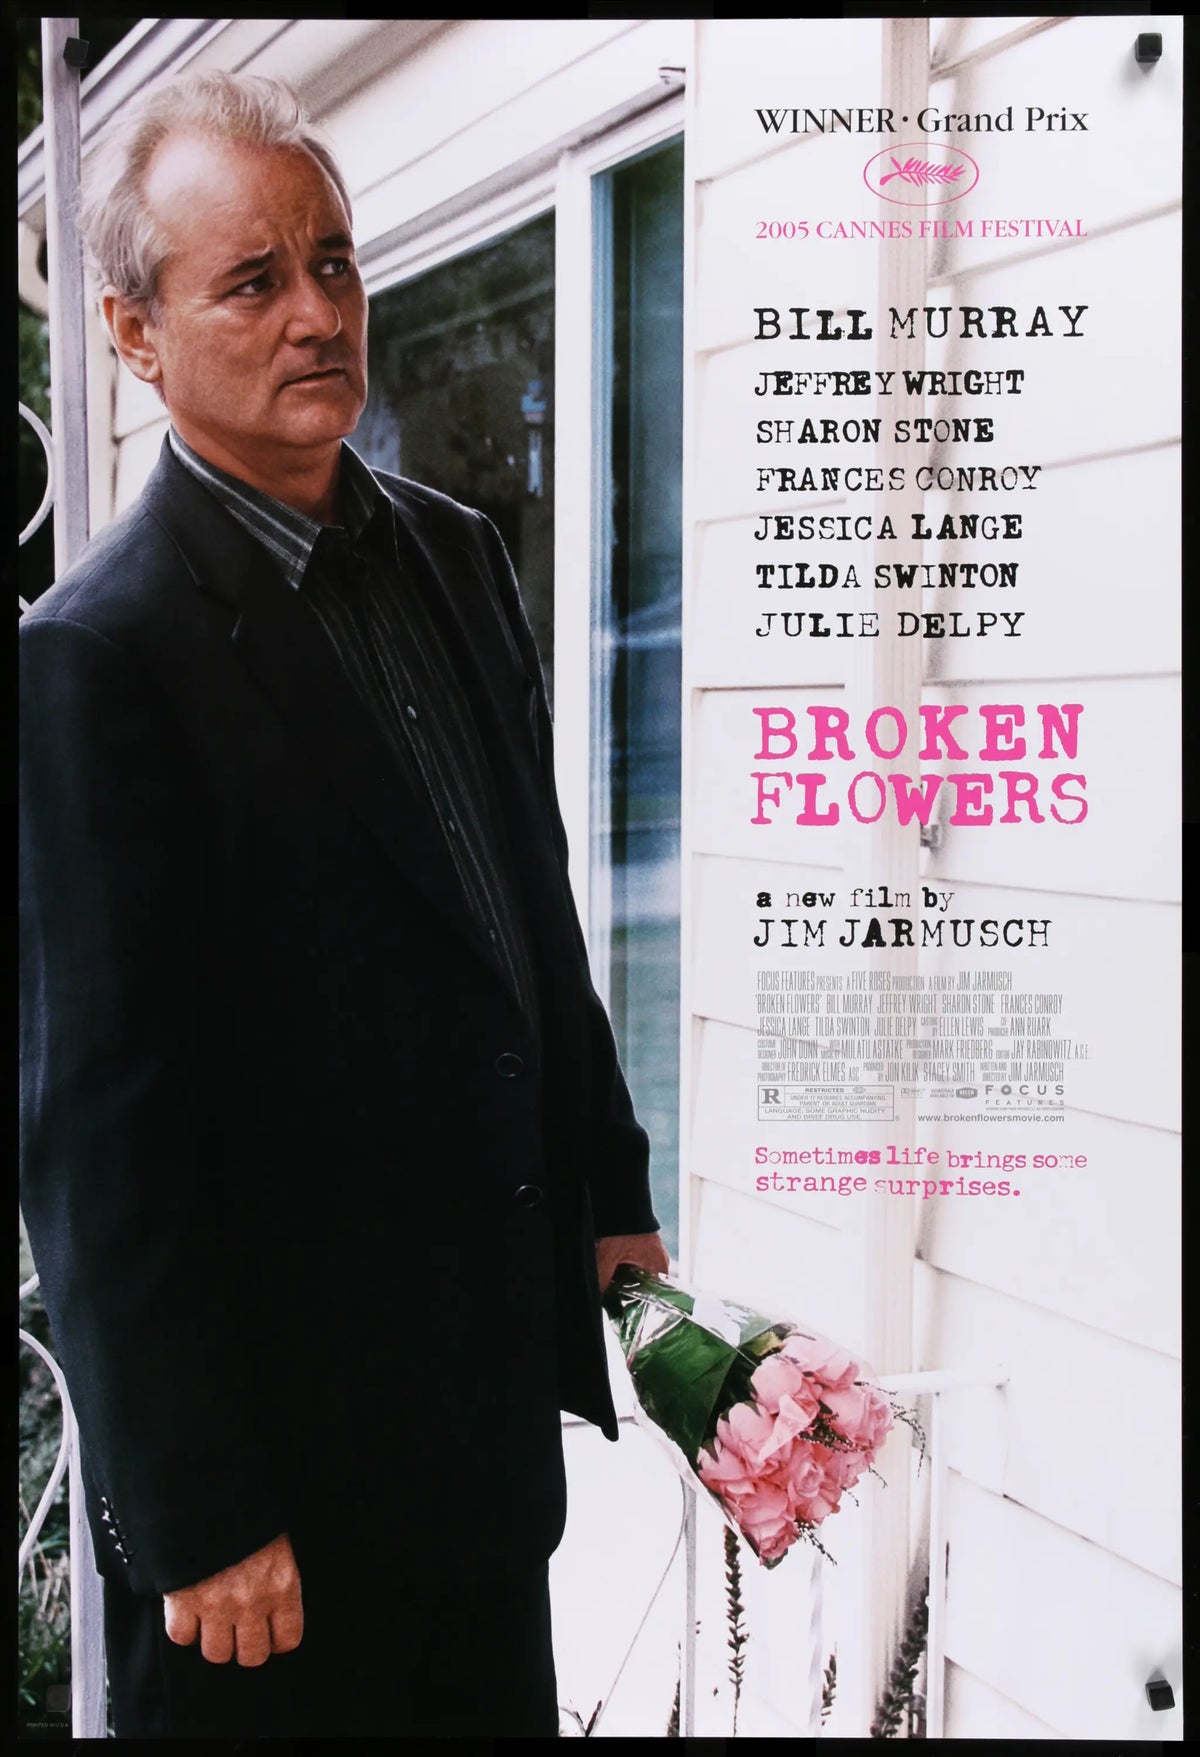 Broken Flowers (2005) original movie poster for sale at Original Film Art